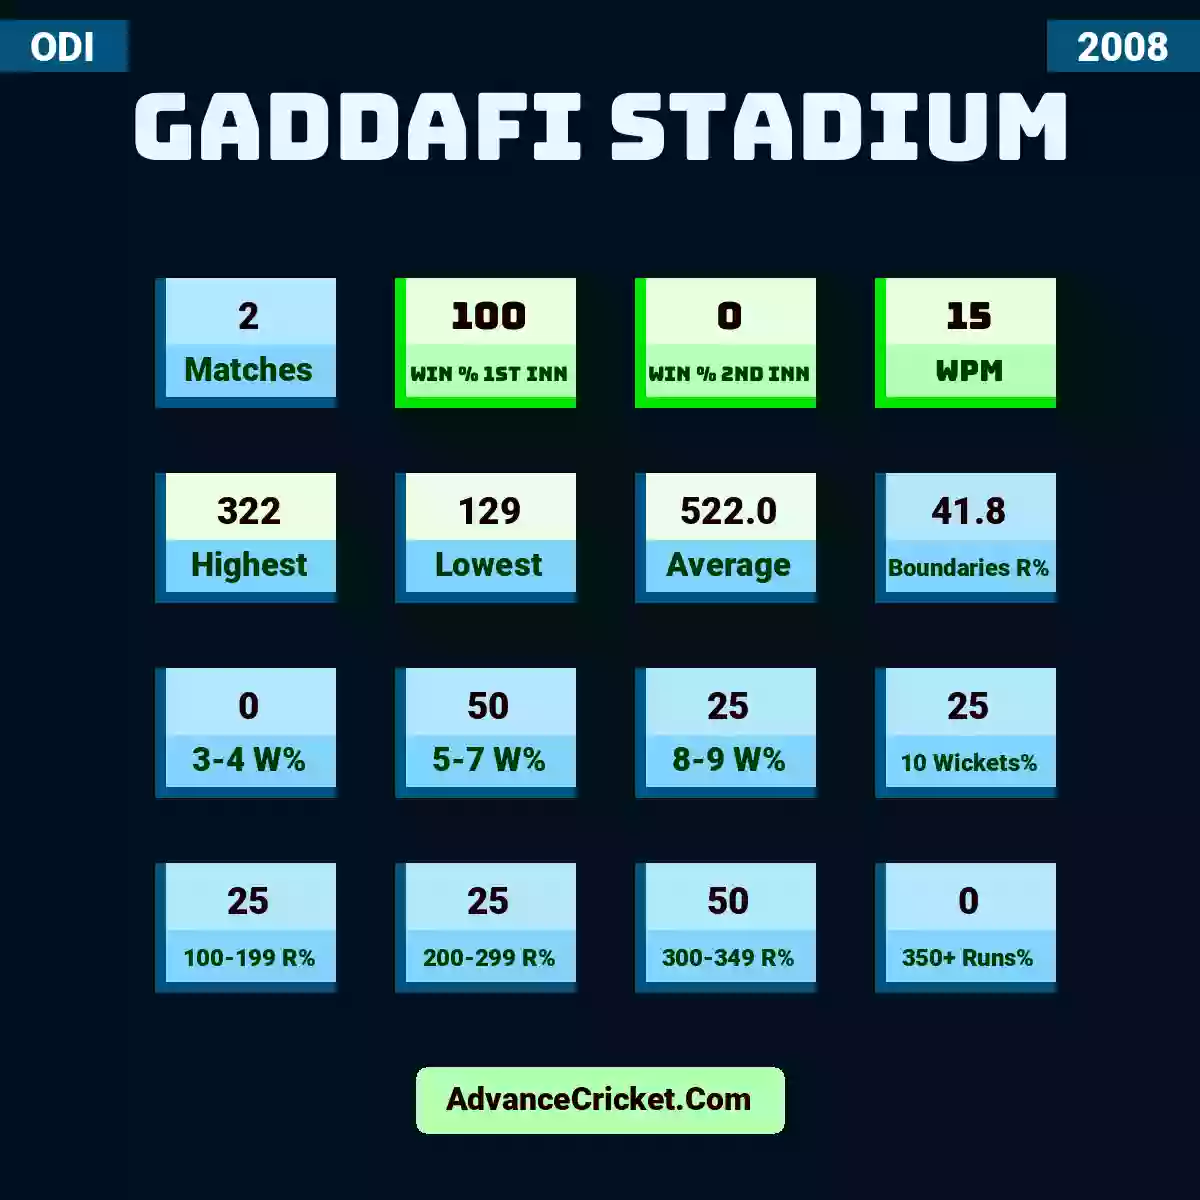 Image showing Gaddafi Stadium with Matches: 2, Win % 1st Inn: 100, Win % 2nd Inn: 0, WPM: 15, Highest: 322, Lowest: 129, Average: 522.0, Boundaries R%: 41.8, 3-4 W%: 0, 5-7 W%: 50, 8-9 W%: 25, 10 Wickets%: 25, 100-199 R%: 25, 200-299 R%: 25, 300-349 R%: 50, 350+ Runs%: 0.